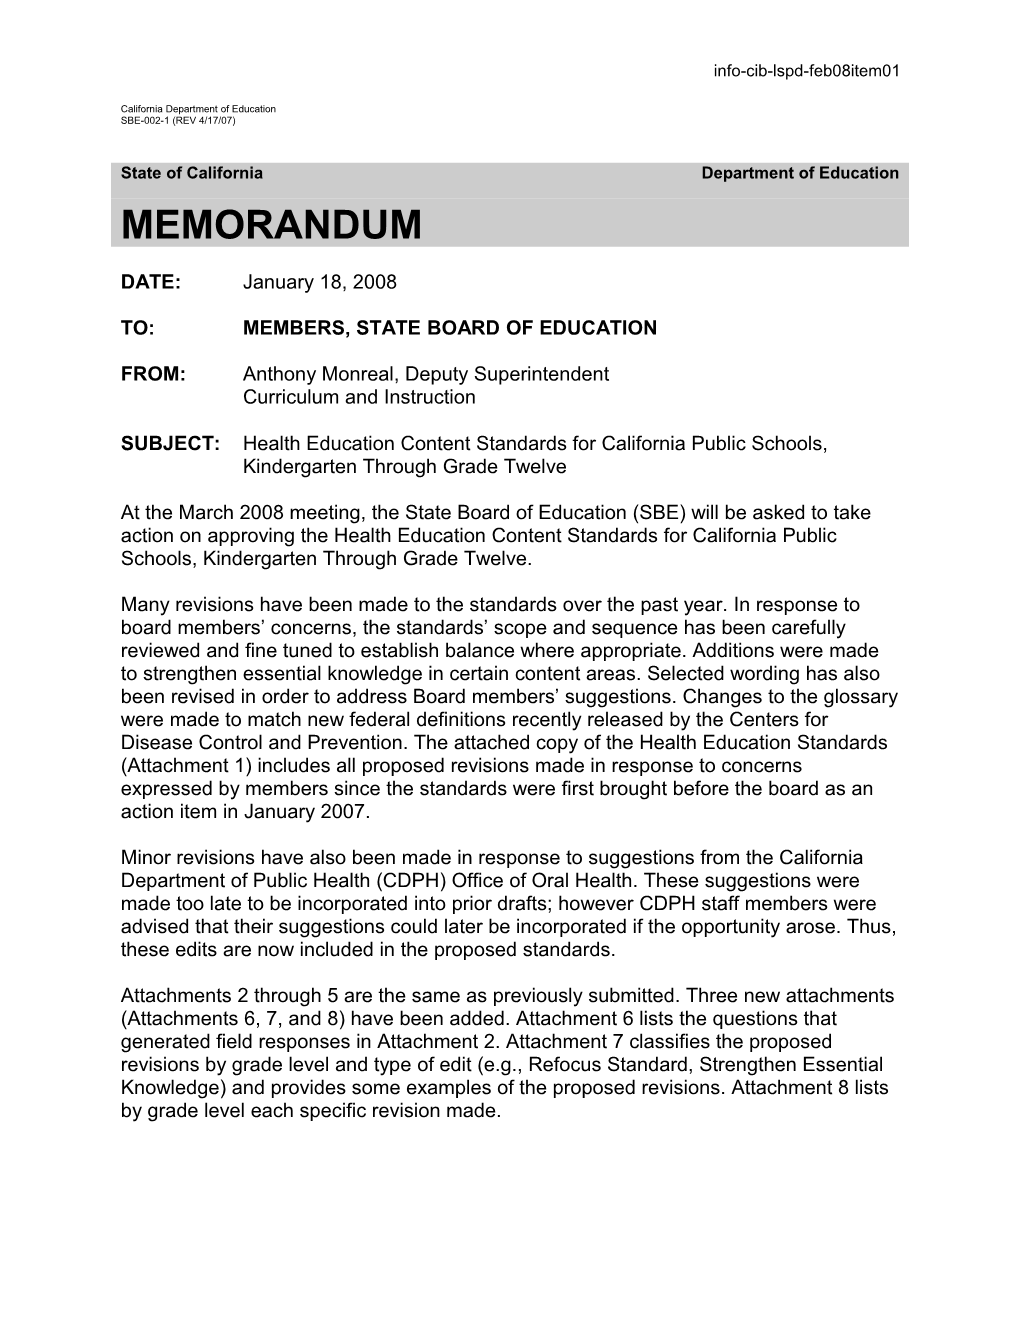 February 2008 LSPD Item 1 - Information Memorandum (CA State Board of Education)